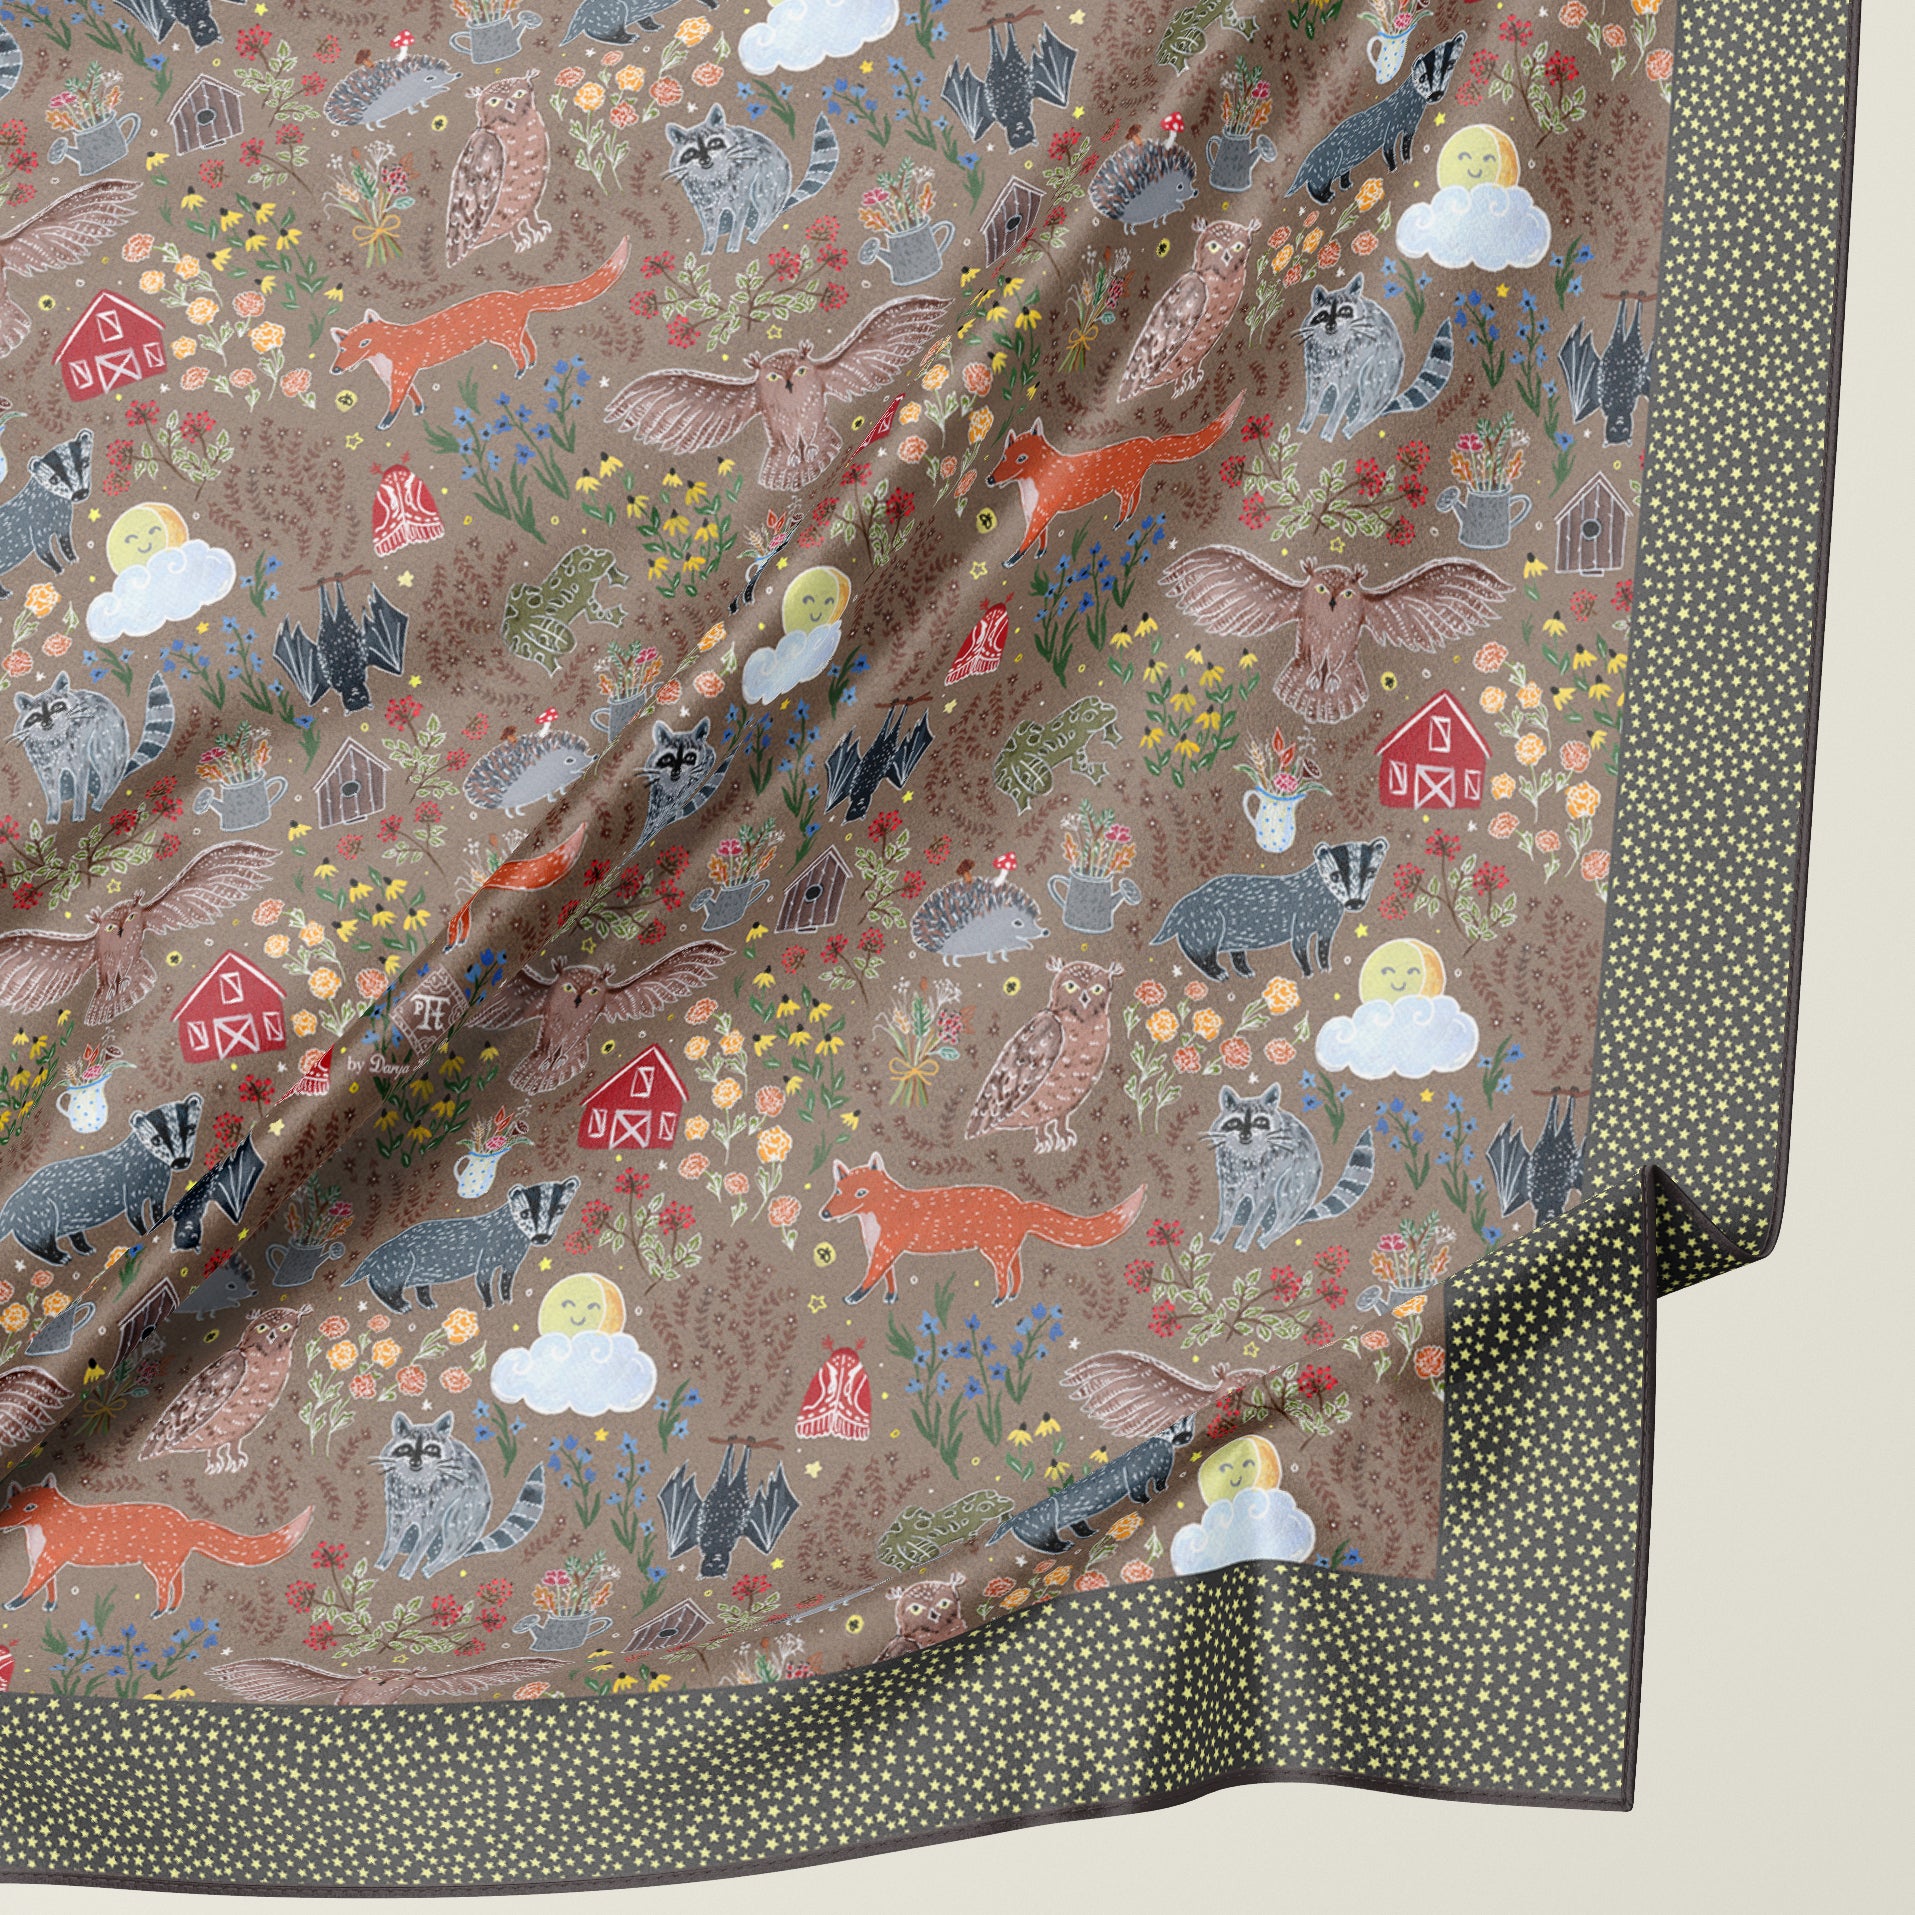 Animal lover silk scarf with nocturnal animals and birds by Darya Karenski